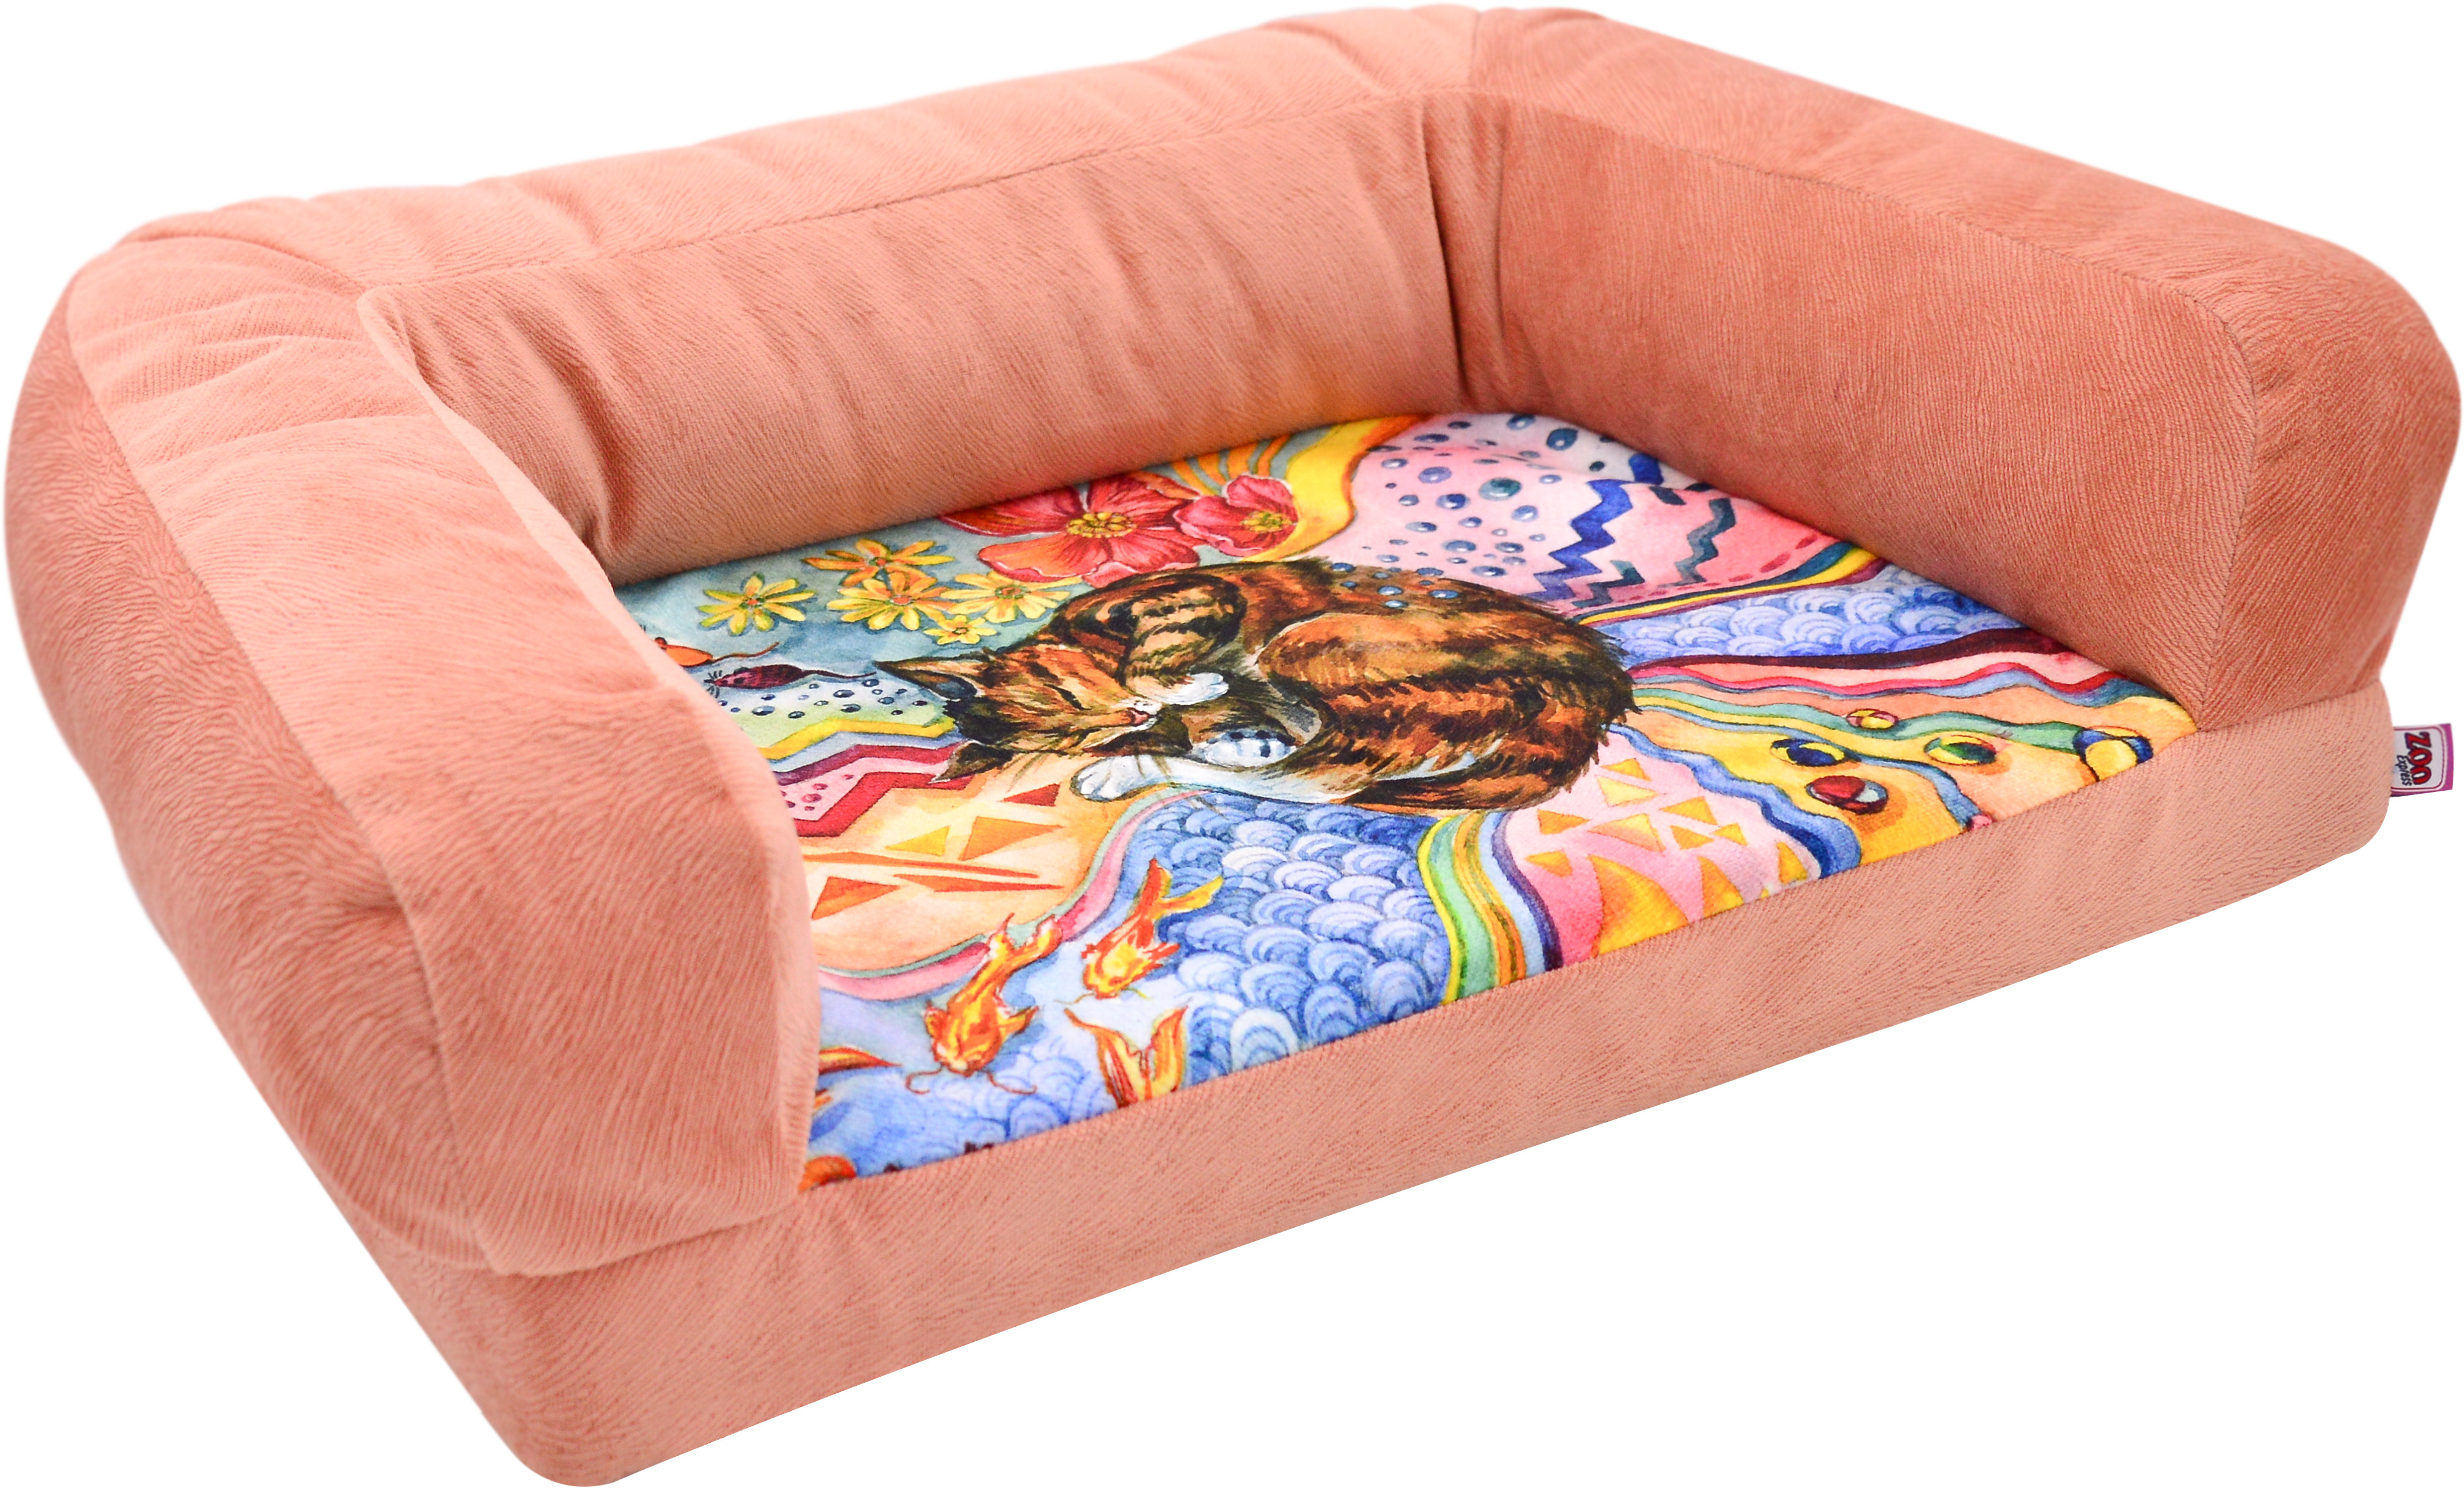 фото Лежанка-диван zooexpress, сны рисунок кошка №2, коралловая, 69х52х18 см